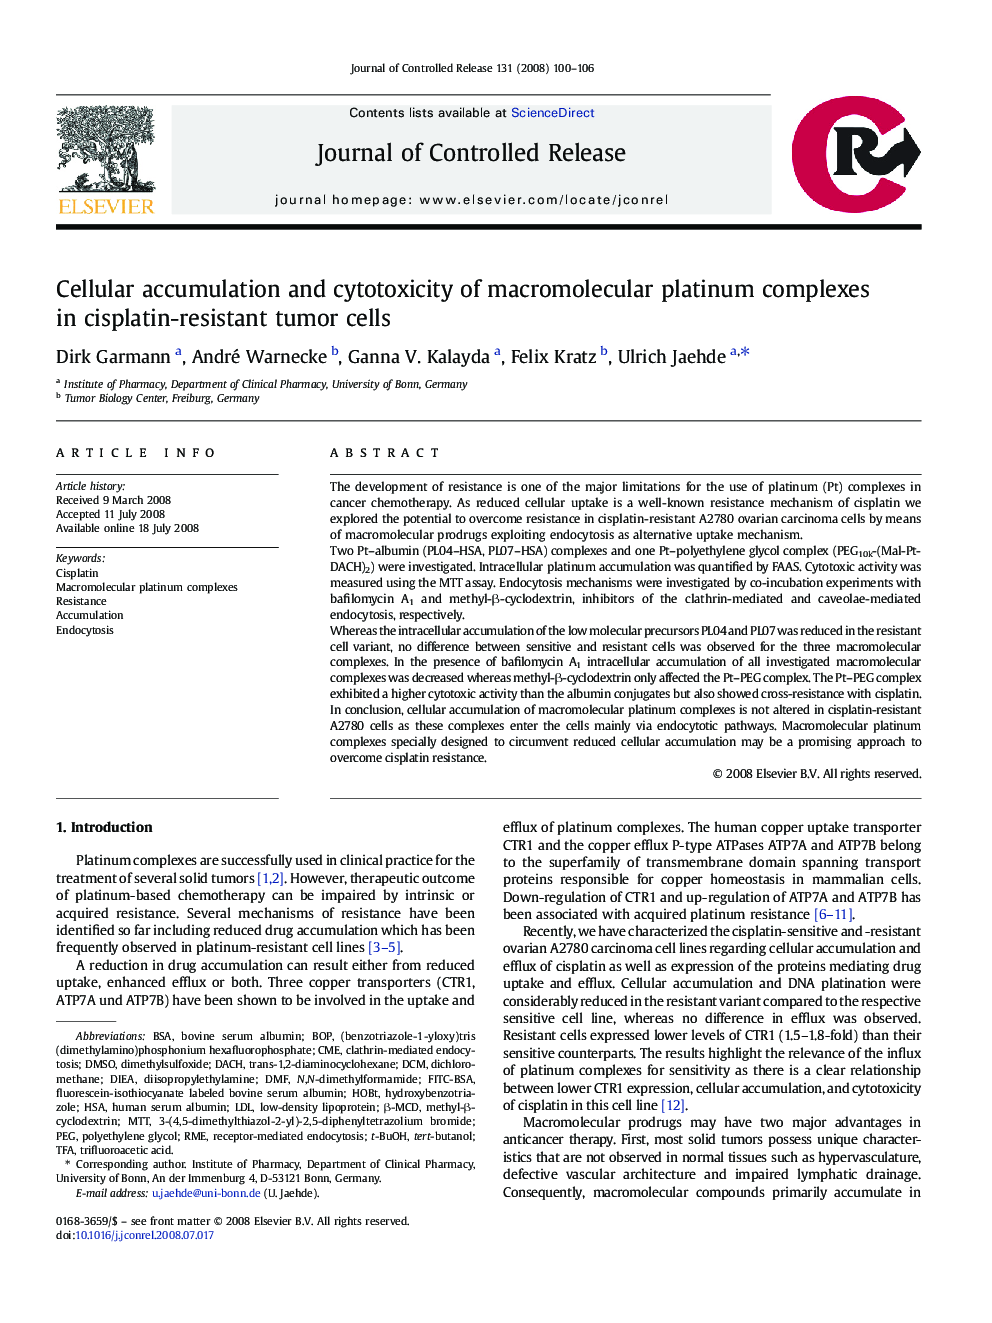 Cellular accumulation and cytotoxicity of macromolecular platinum complexes in cisplatin-resistant tumor cells